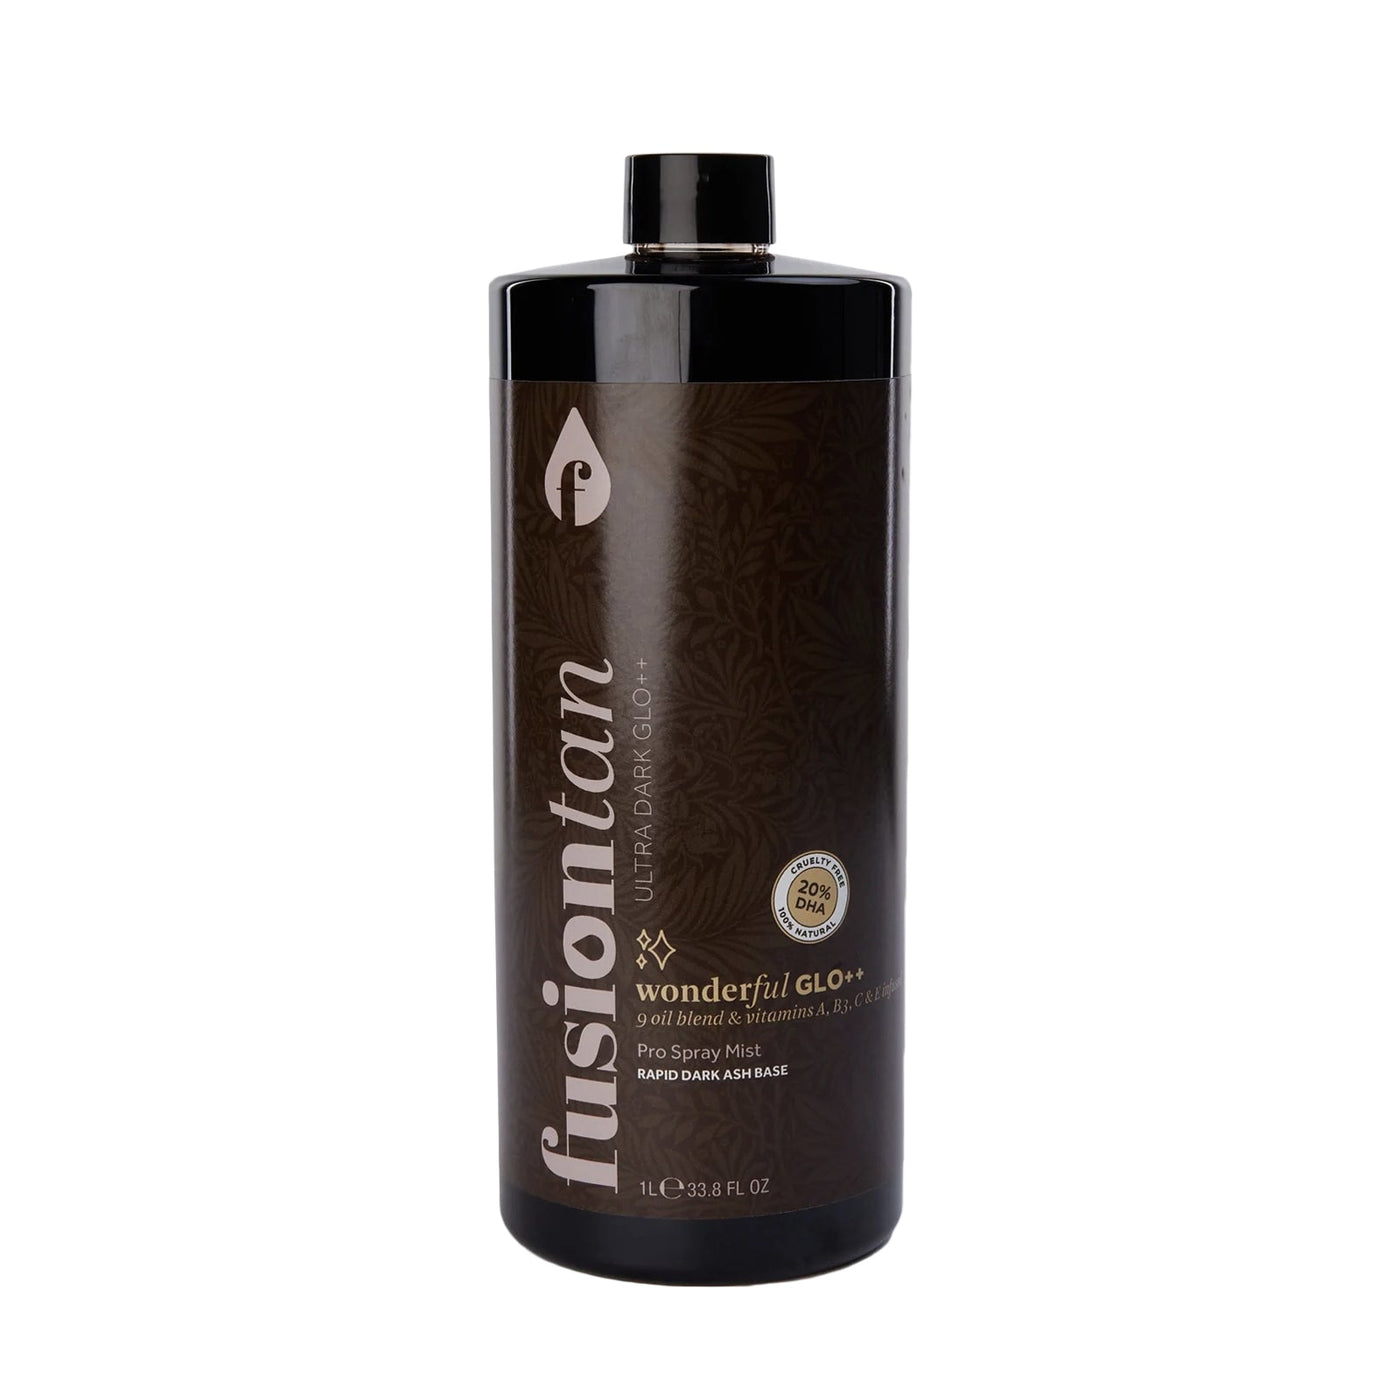 Fusion Tan Ultra Dark Wonderful GLO++ 20% Pro Spray Tan Mist